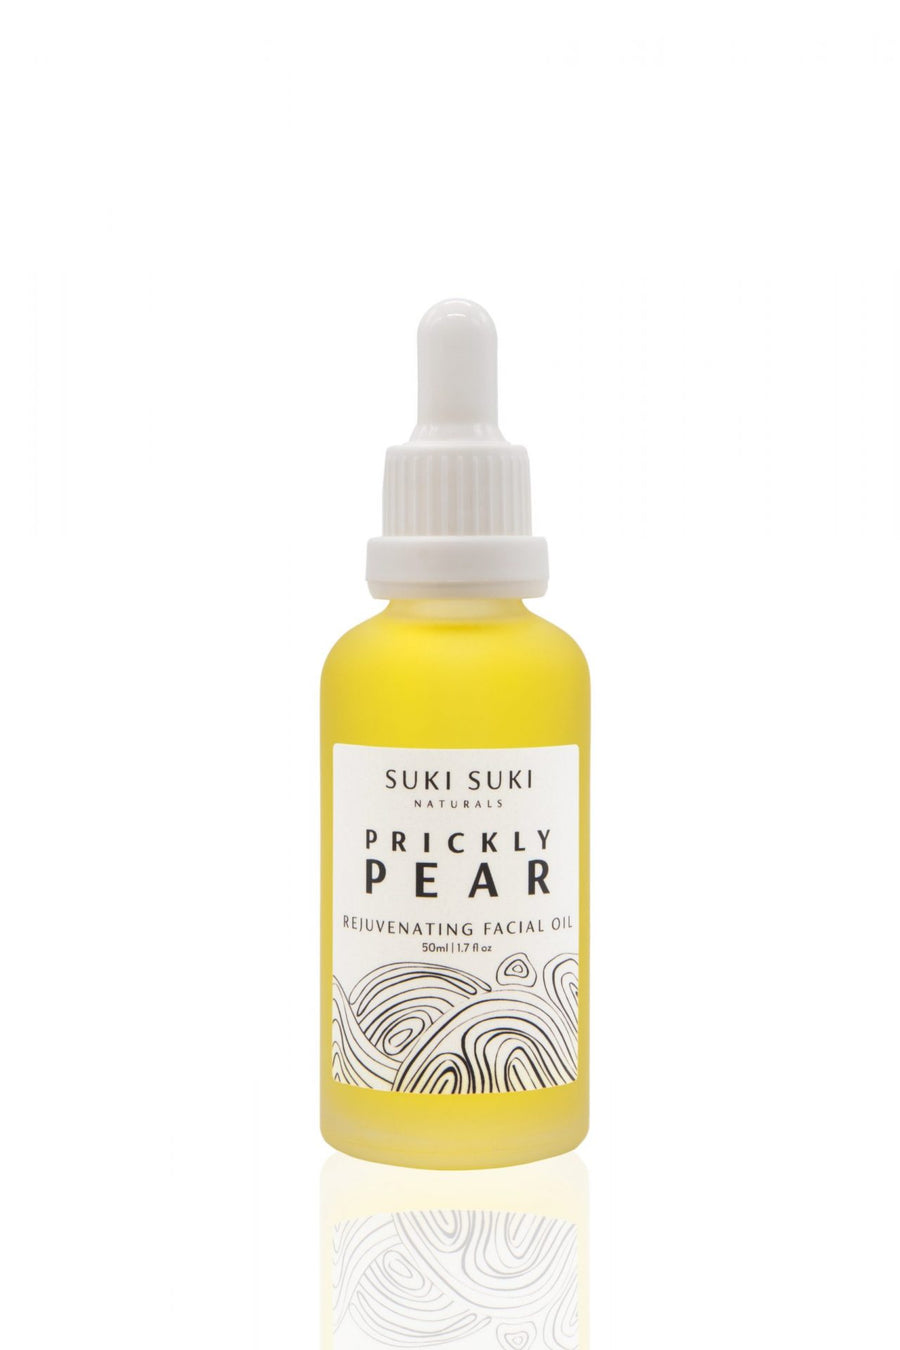 Prickly Pear Rejuvenating Facial Oil